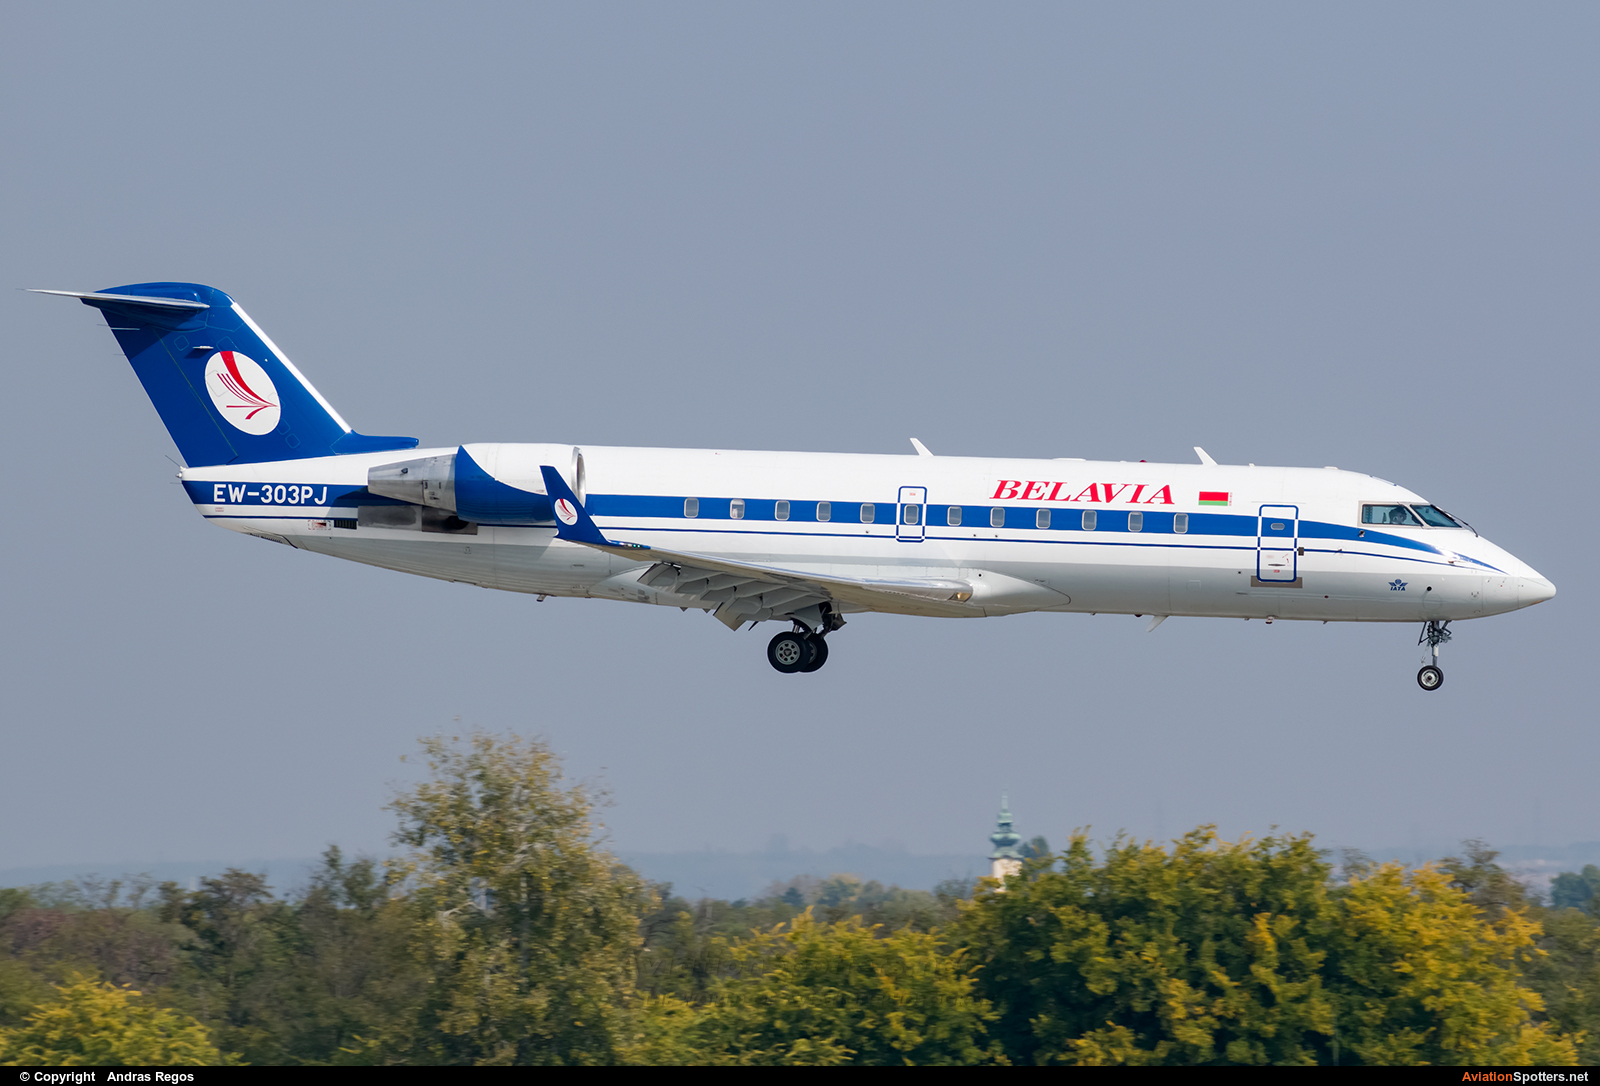 Belavia  -  CL-600 Regional Jet CRJ-200  (EW-303PJ) By Andras Regos (regos)